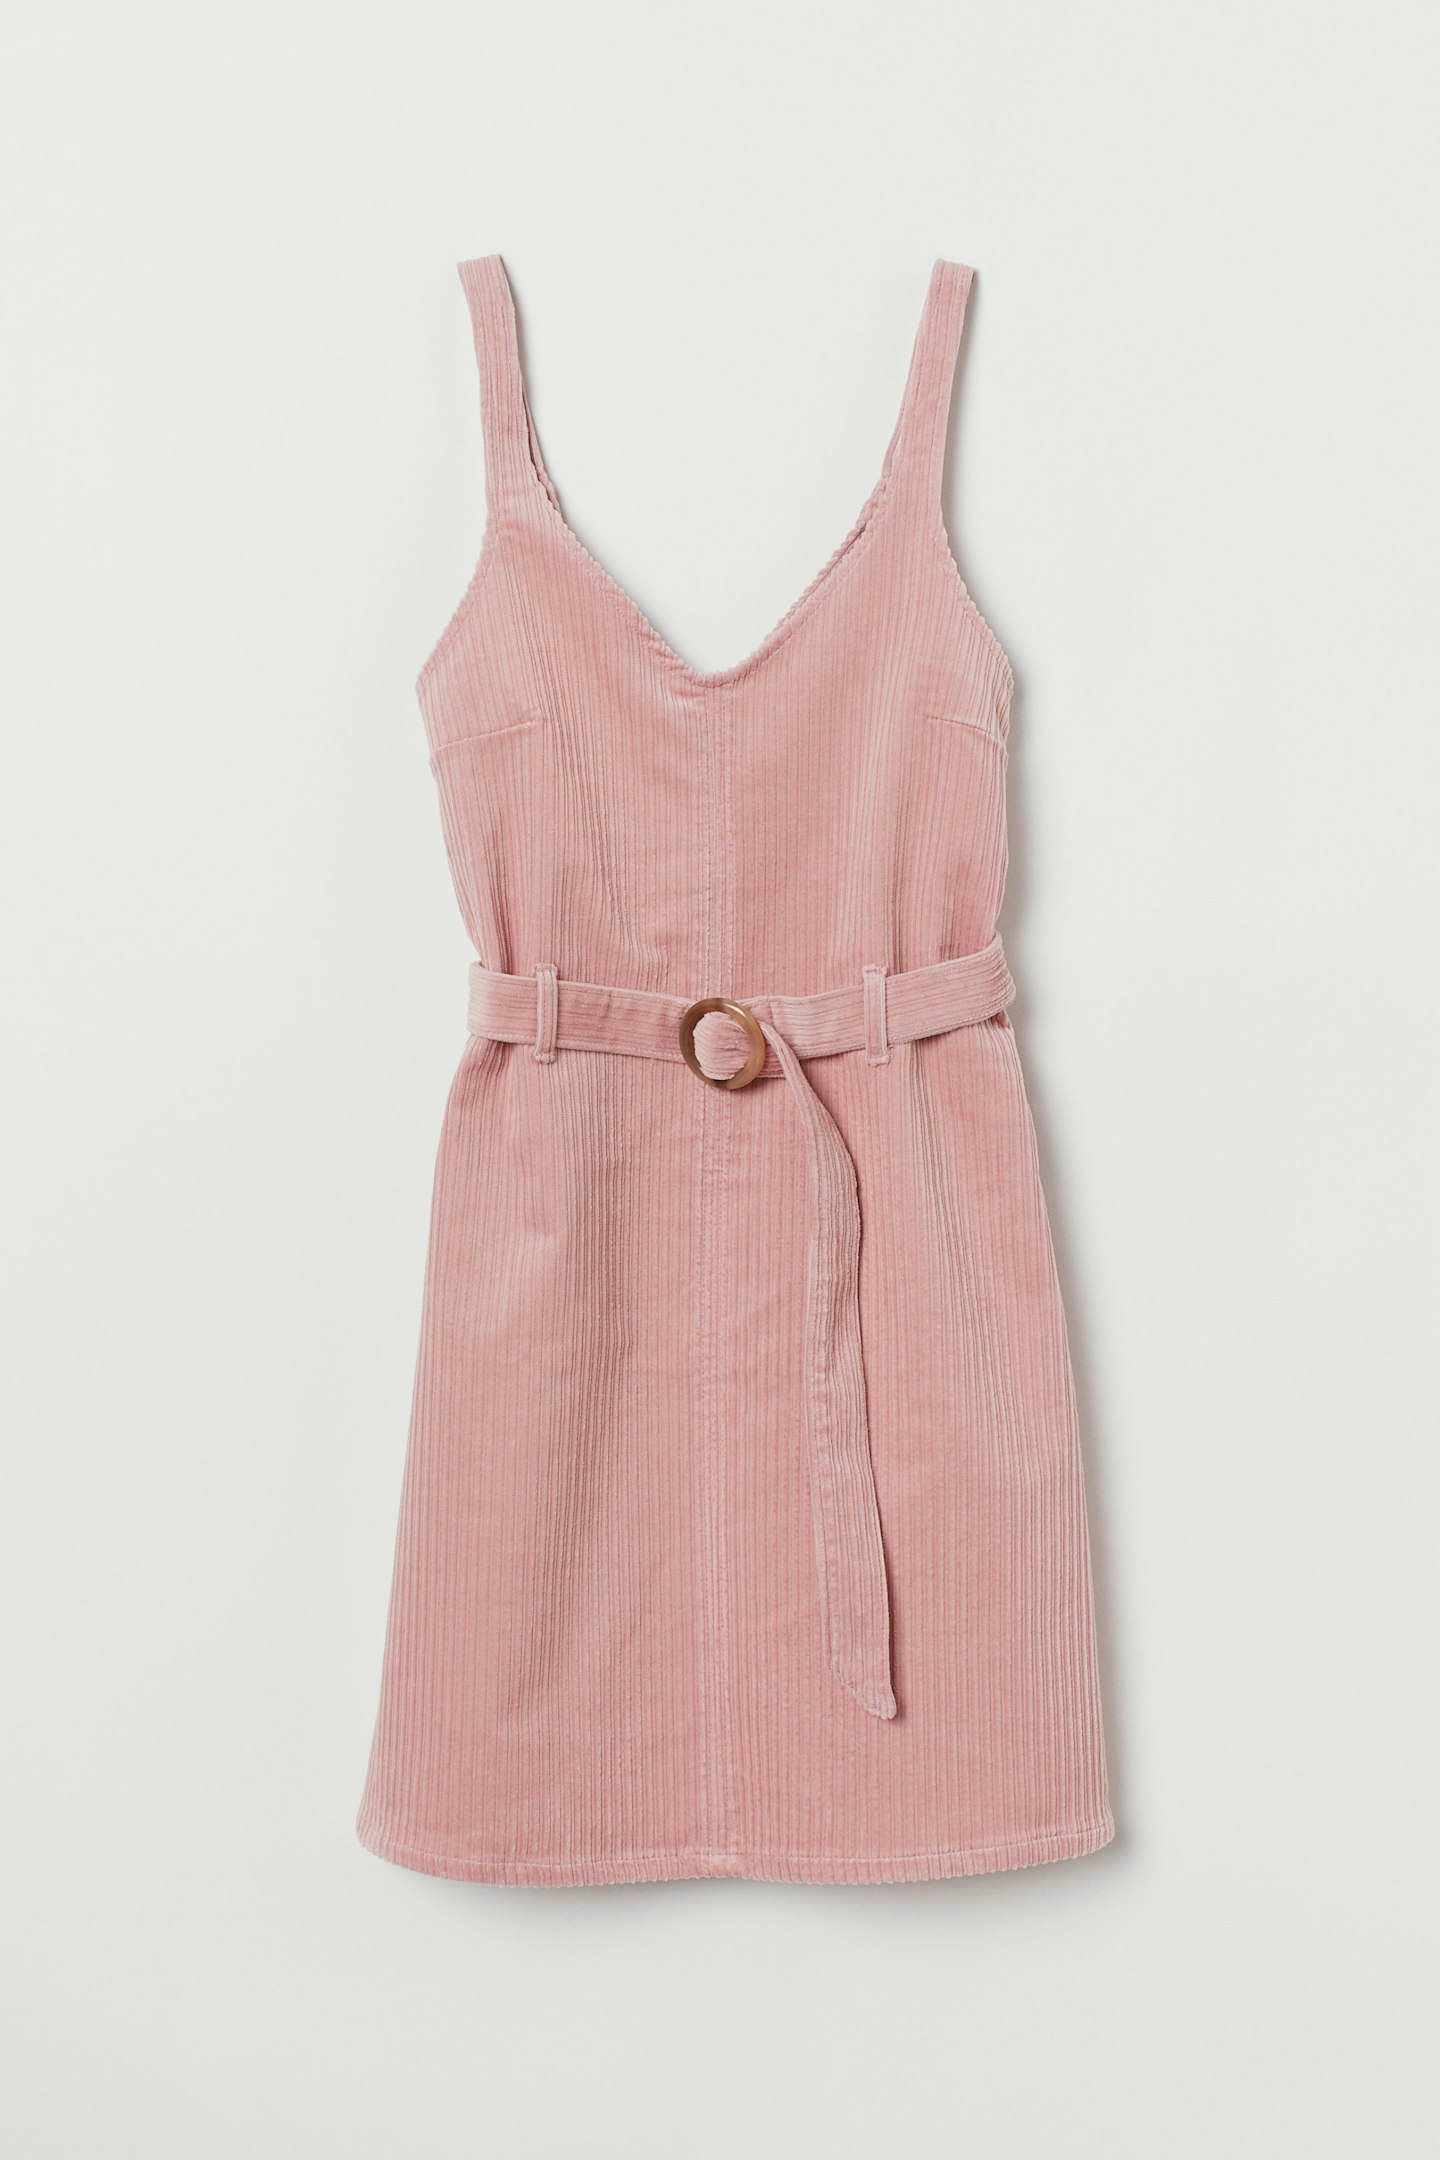 H&M, Corduroy Dress, £29.99